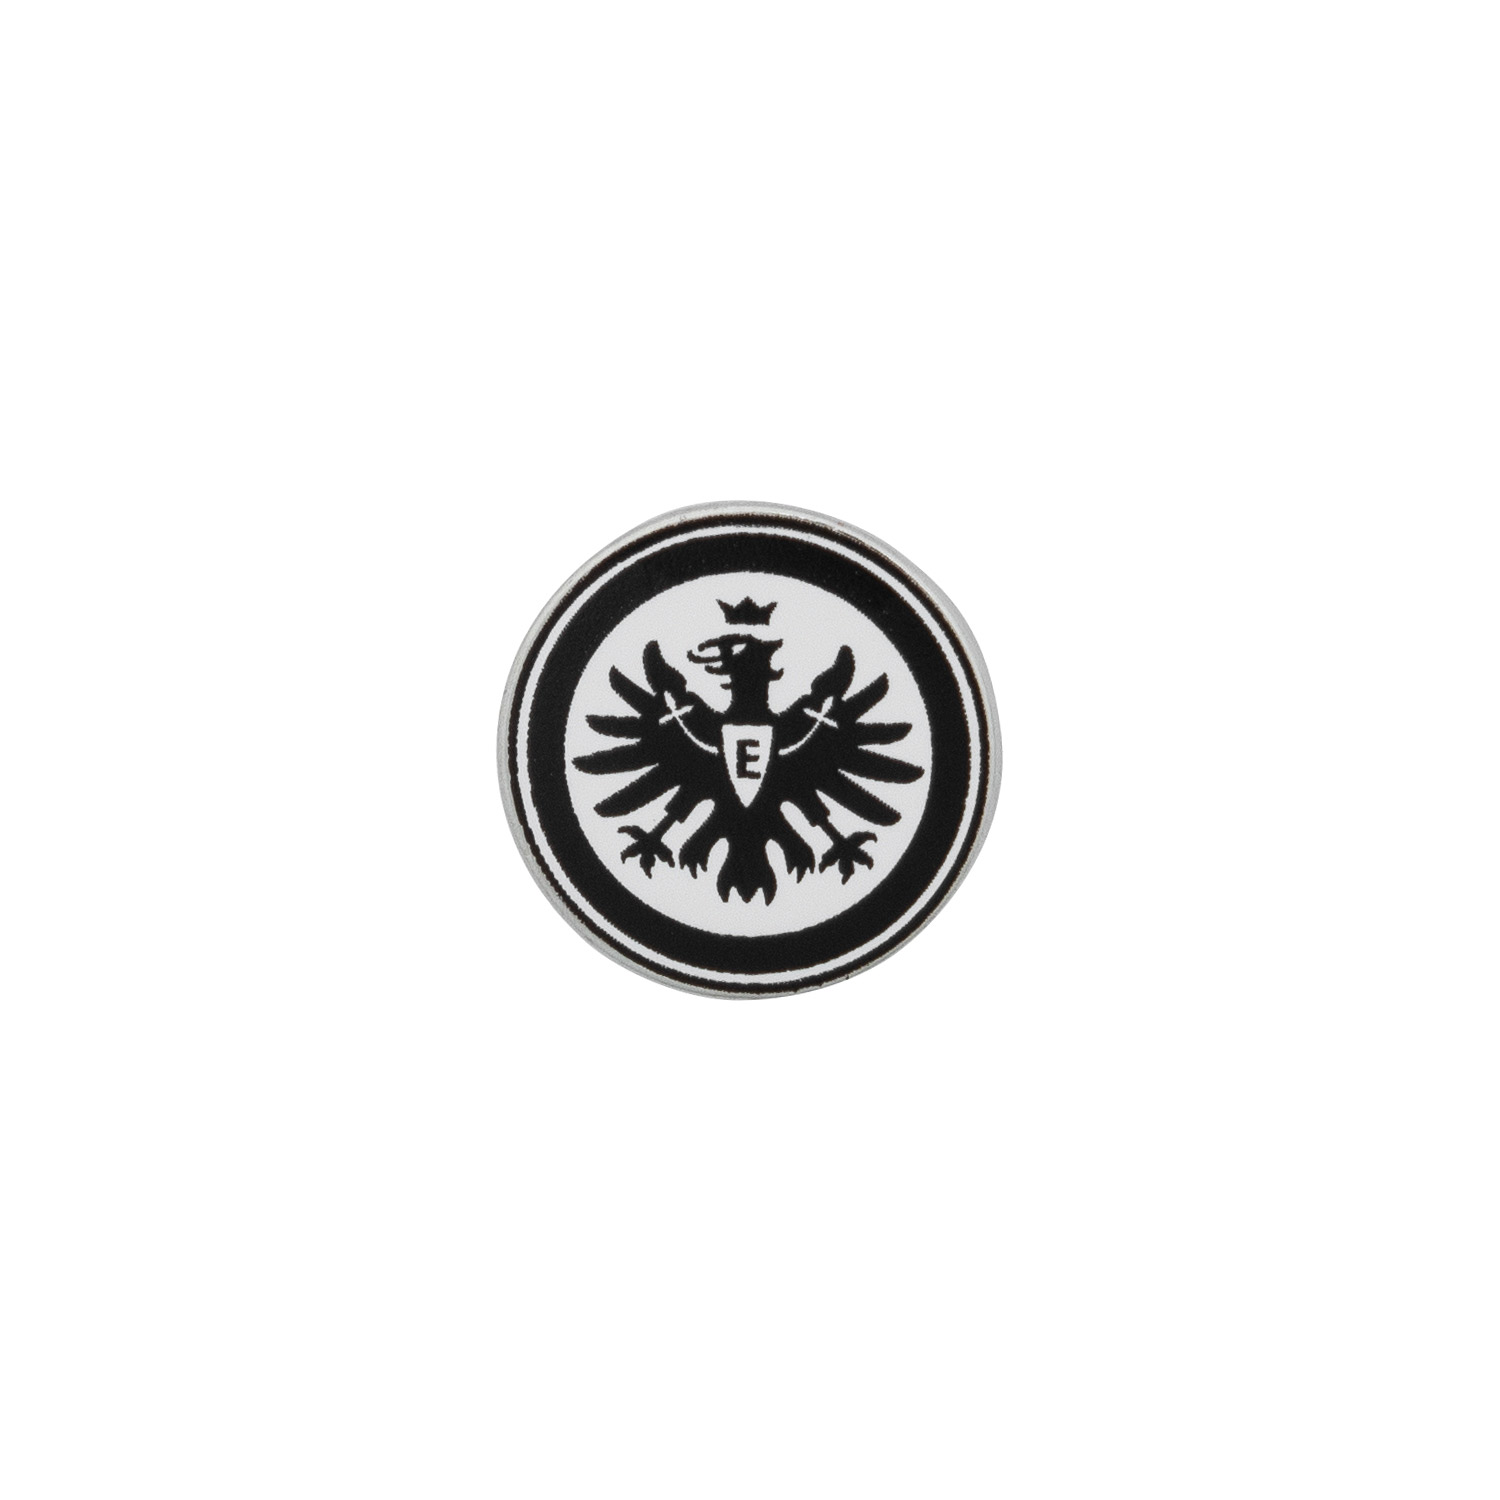 Eintracht Frankfurt SGE Pin Logo Anstecker Fussball Bundesliga #092 